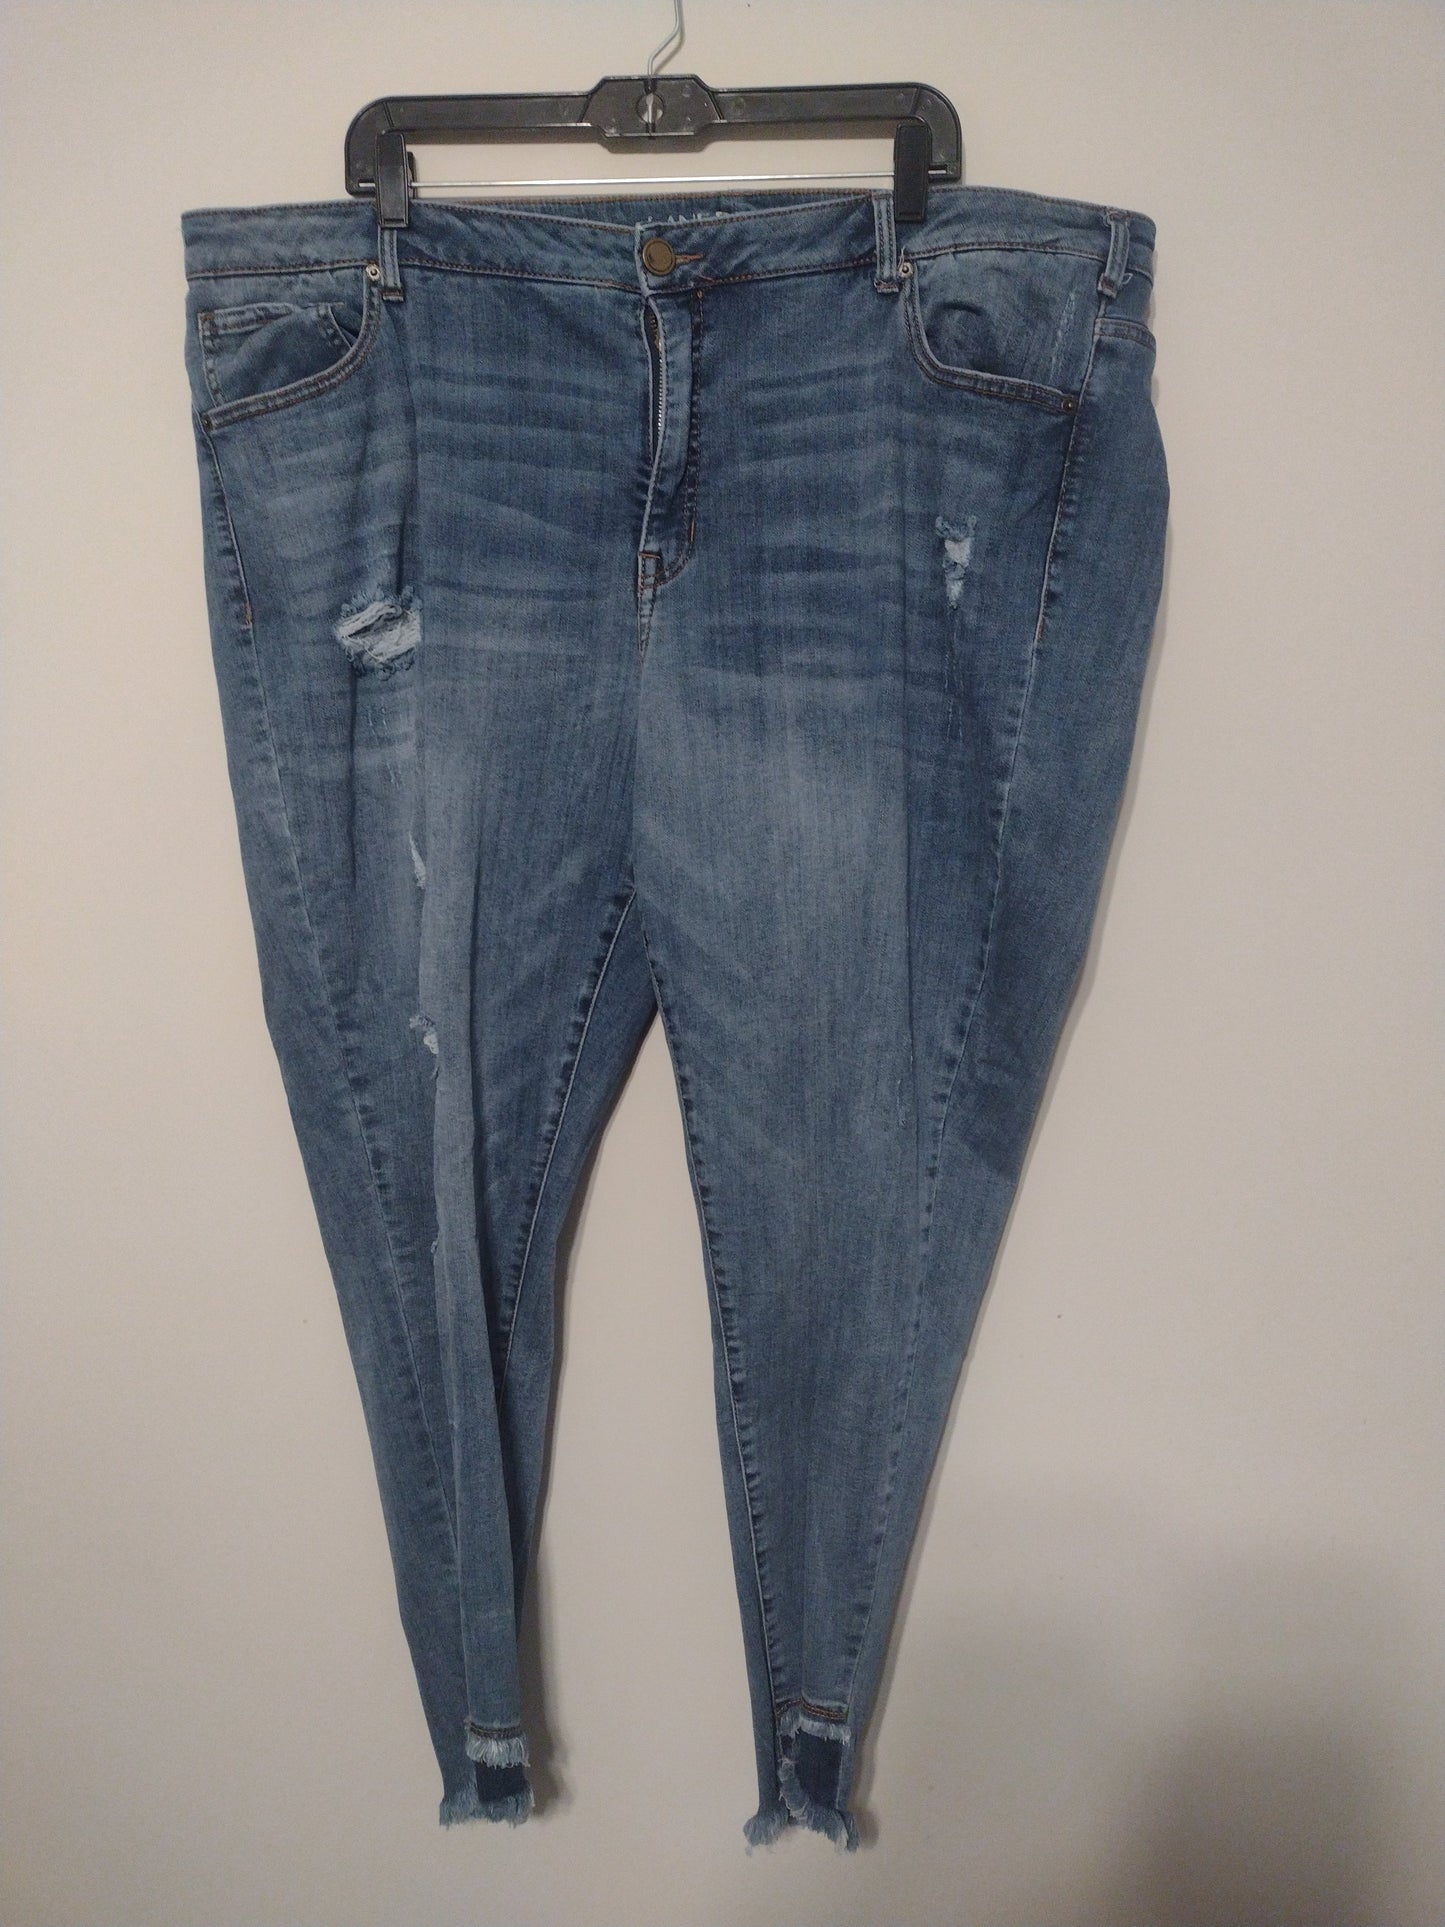 Jeans Skinny By Lane Bryant  Size: 26